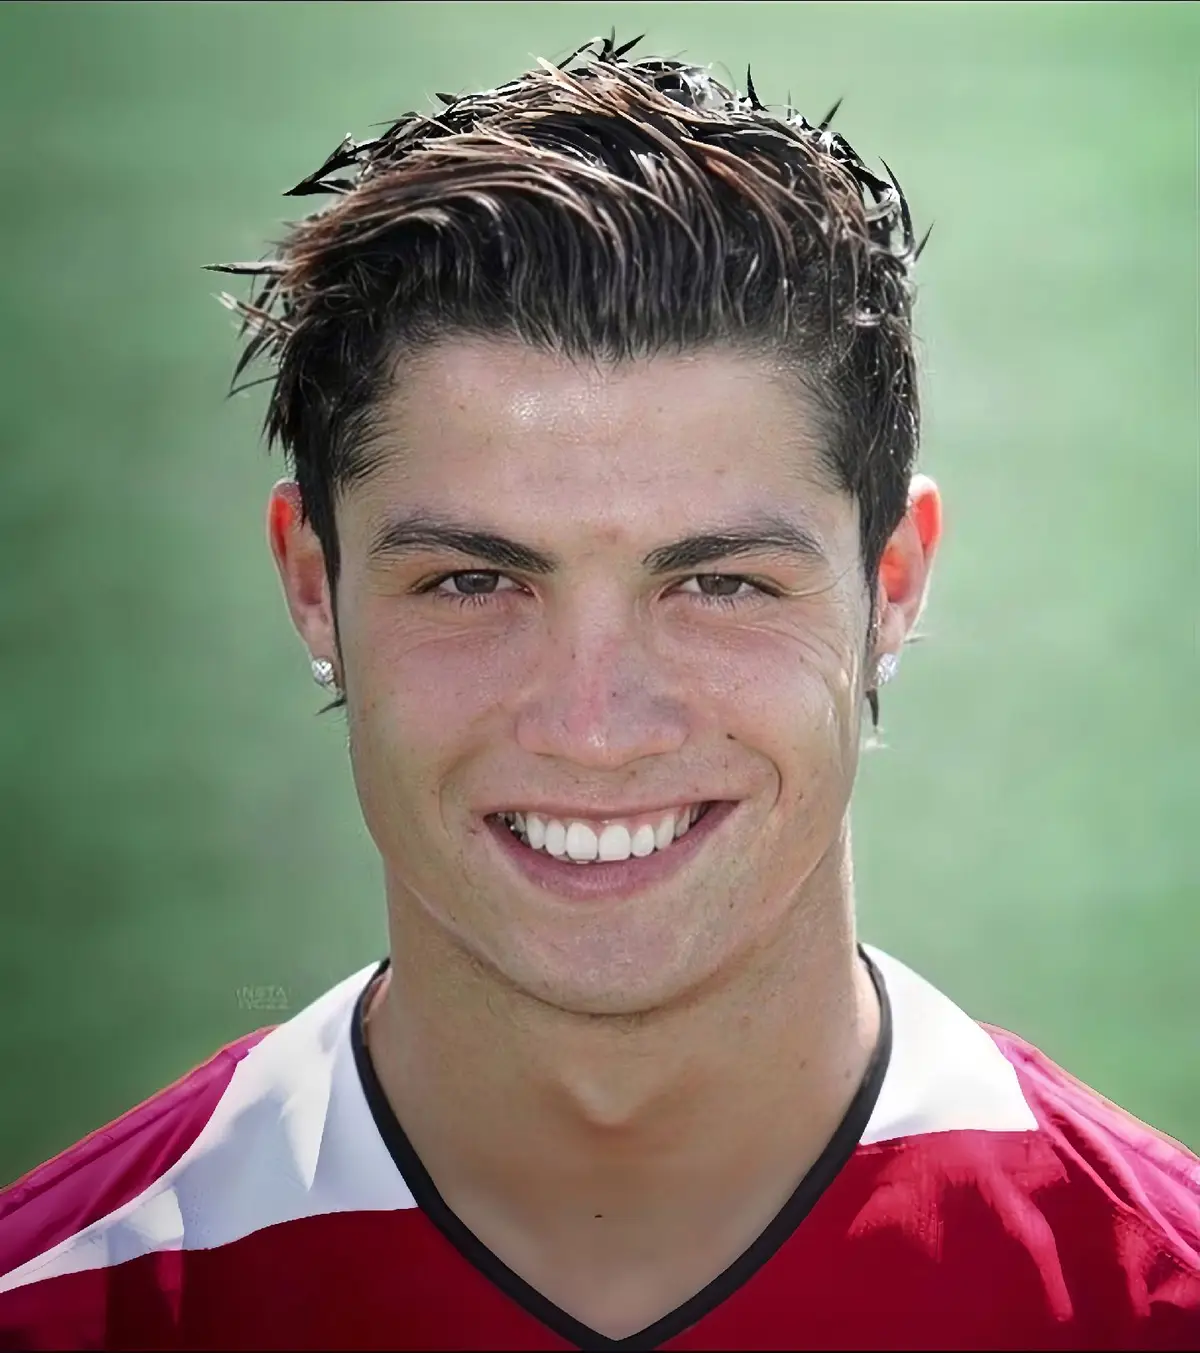 Cristiano Ronaldo 2005/06 🔥 #football #cristiano #ronaldo #fyp 